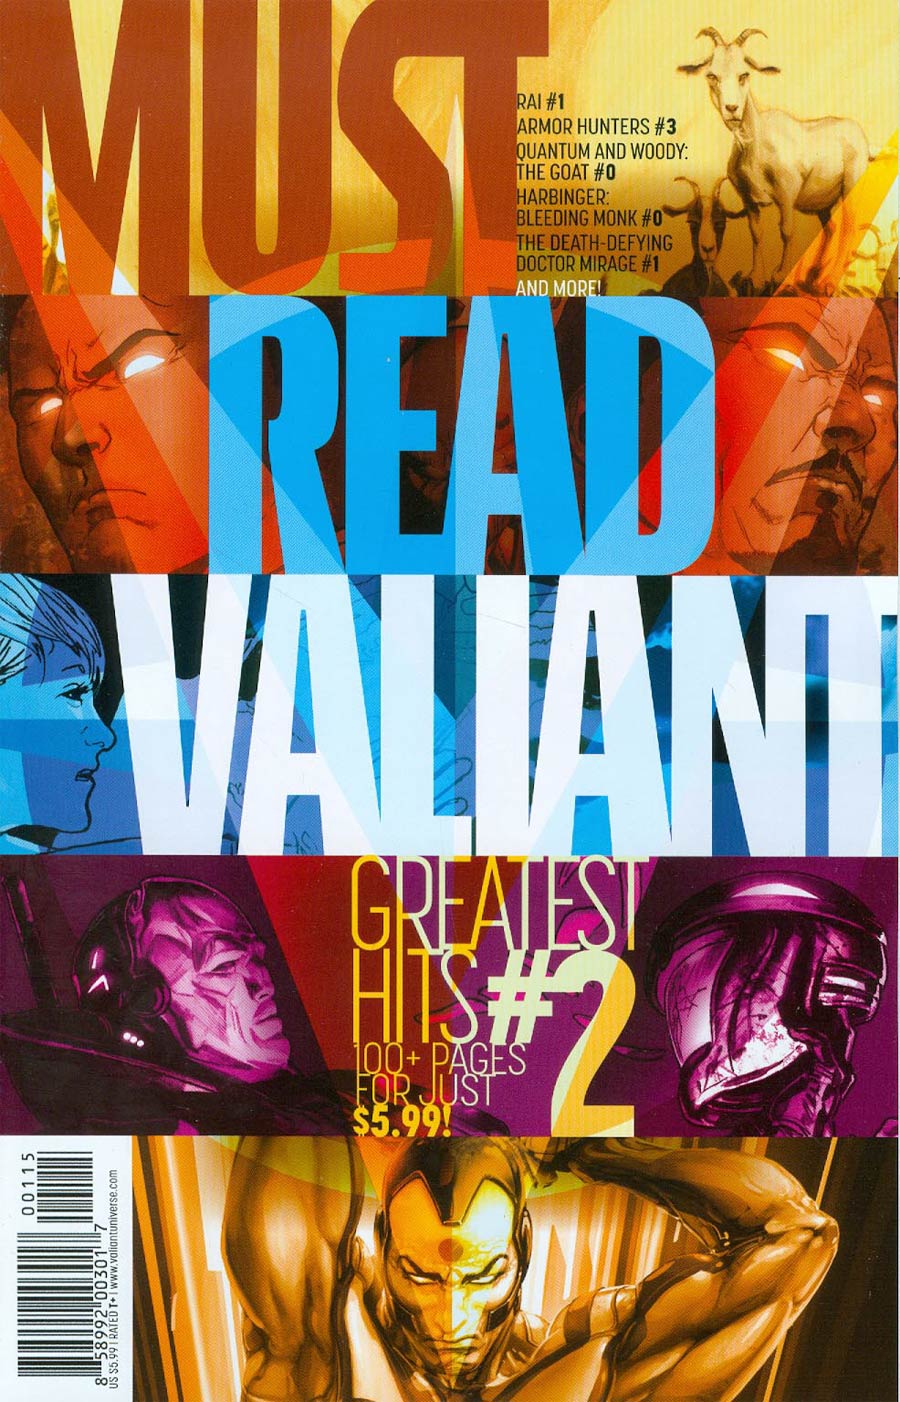 Must Read Valiant Greatest Hits #2